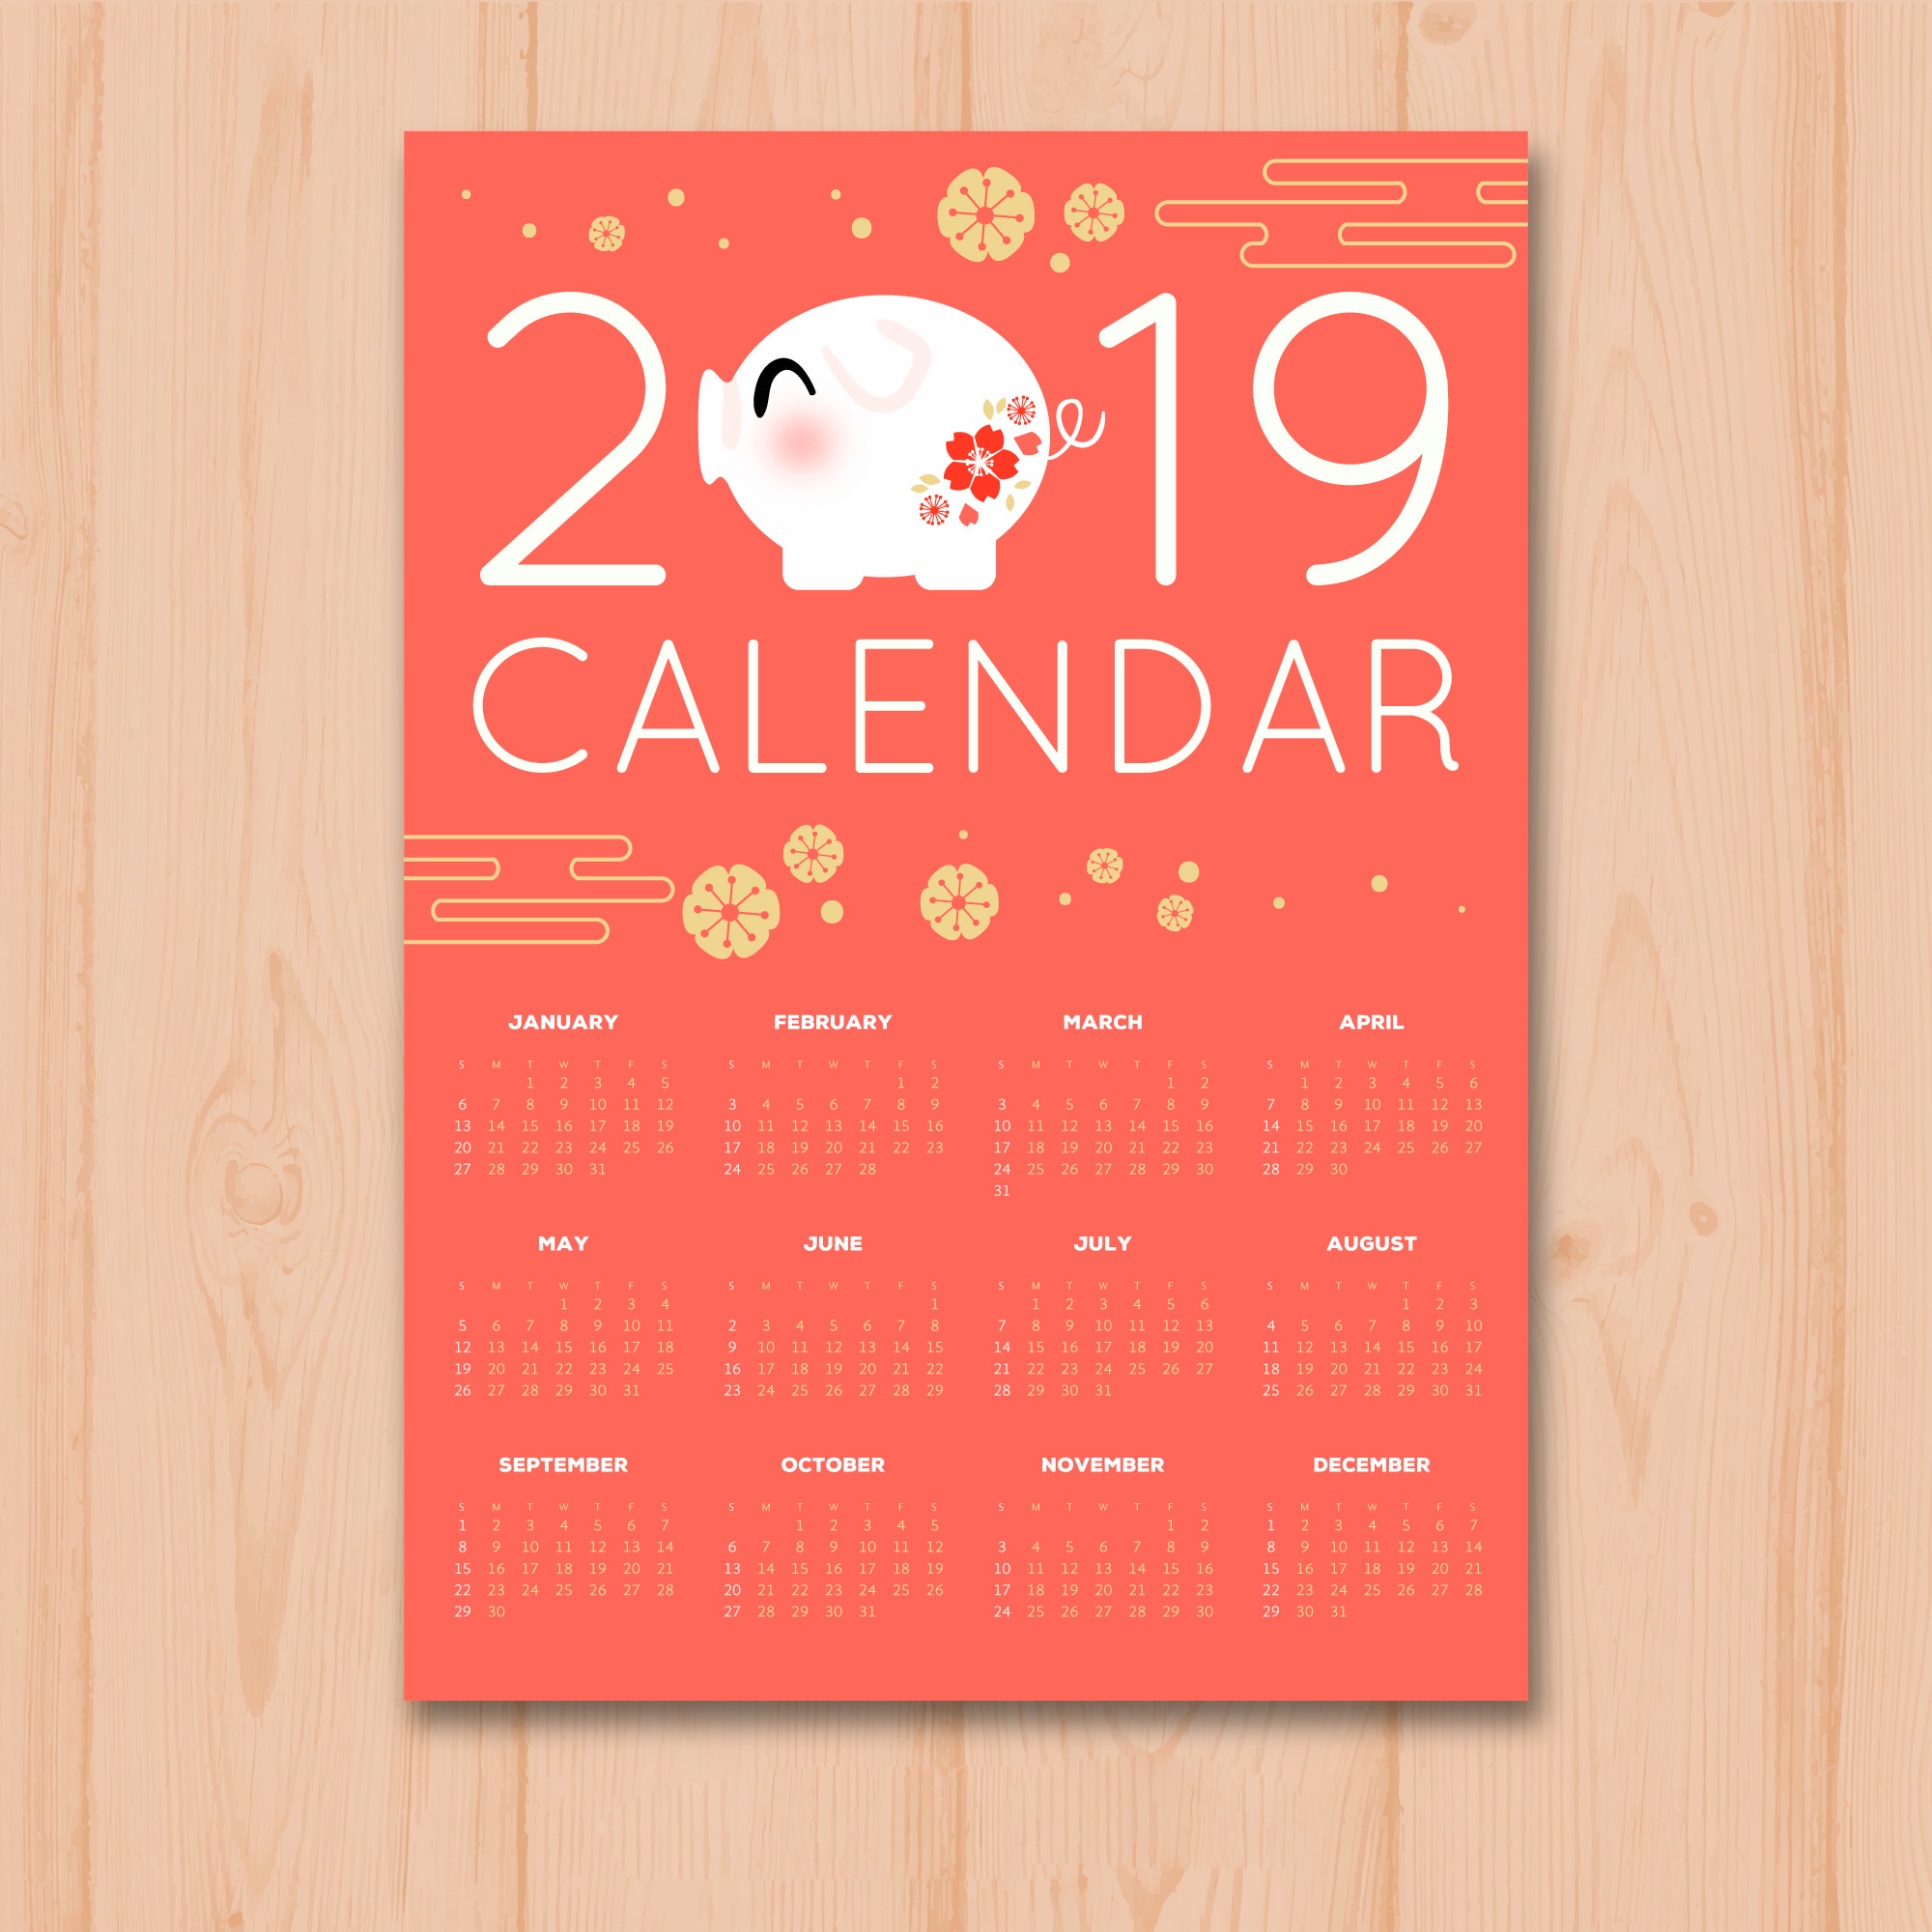 时尚简约的2019新年挂历日历矢量素材模板 Stylish Minimalist 2019 New Year Calendar Calendar Vector Material Template插图7